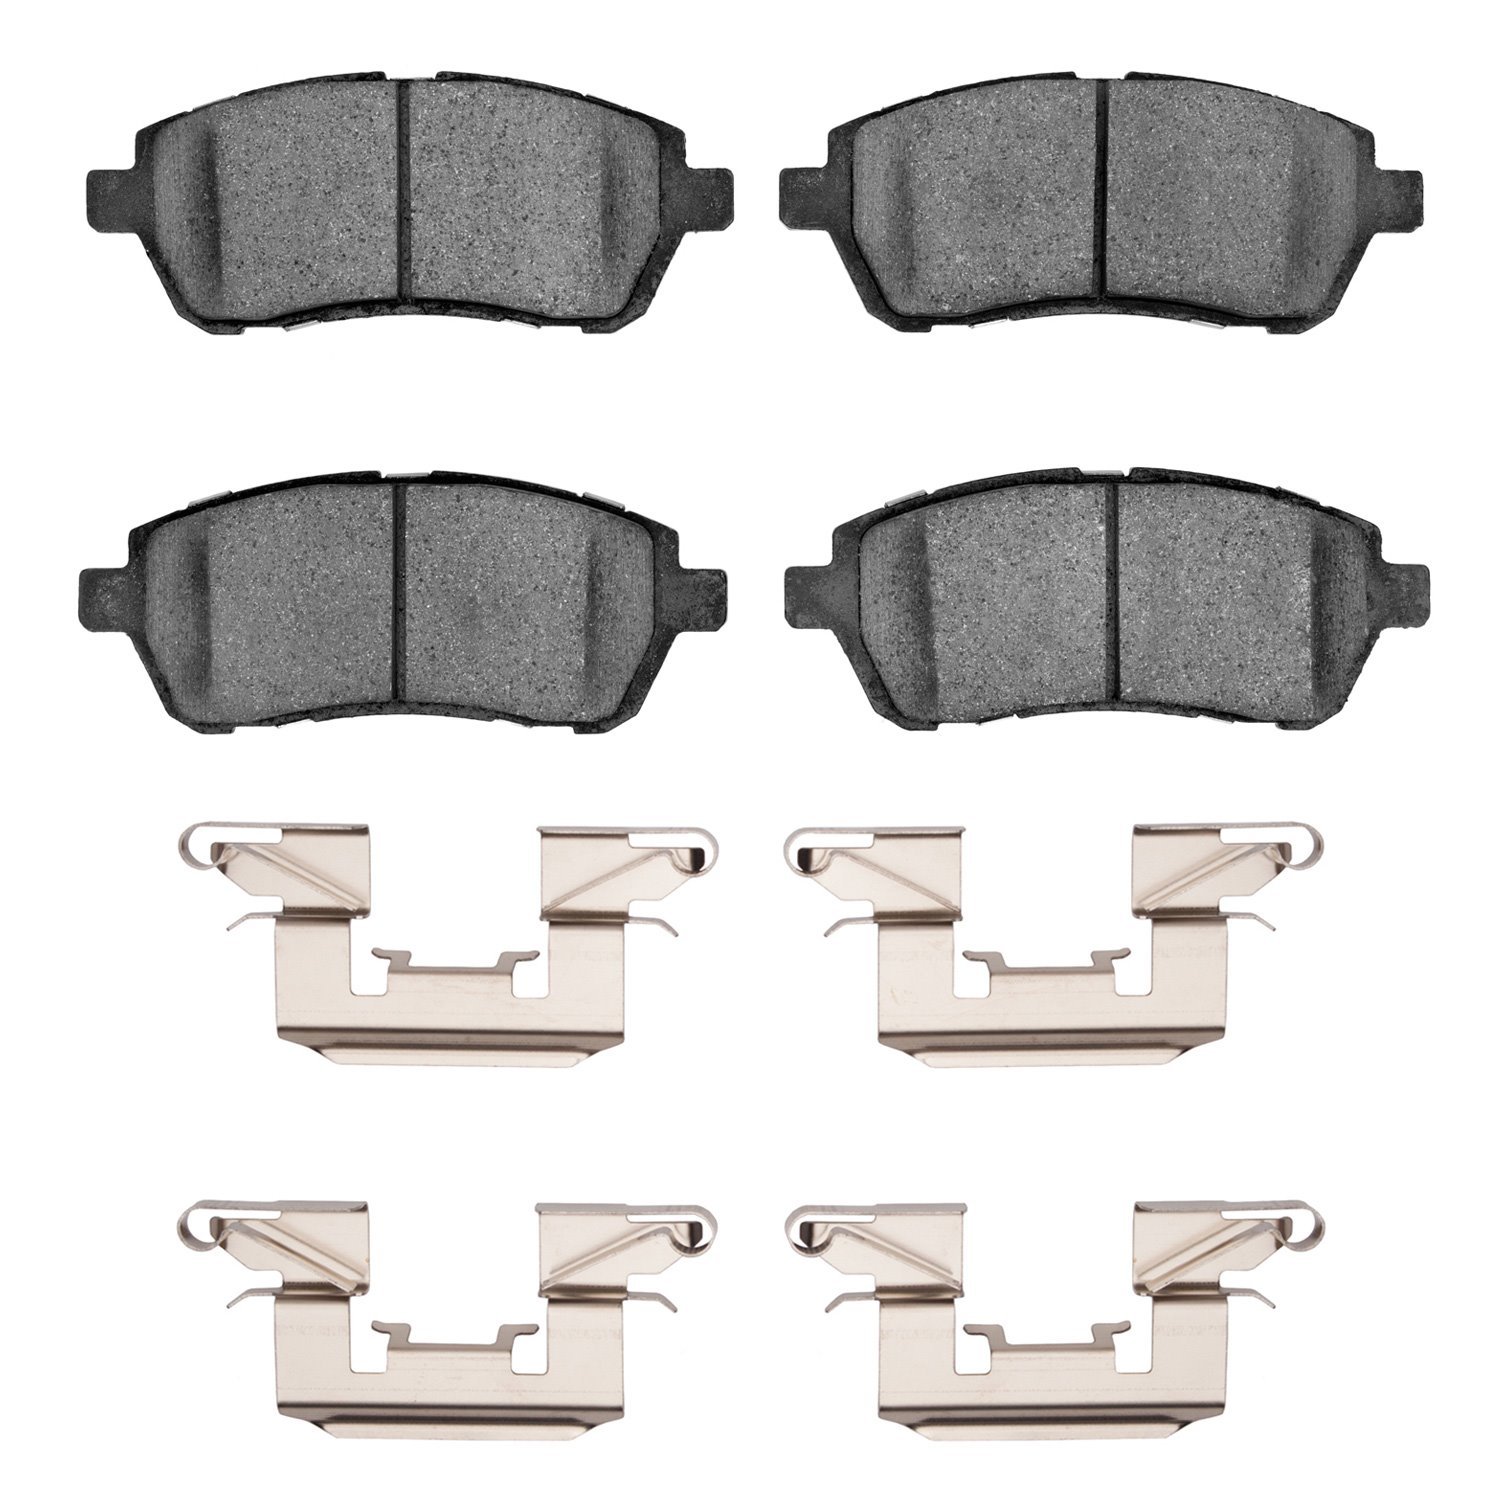 1310-1454-01 3000-Series Ceramic Brake Pads & Hardware Kit, 2011-2019 Ford/Lincoln/Mercury/Mazda, Position: Front